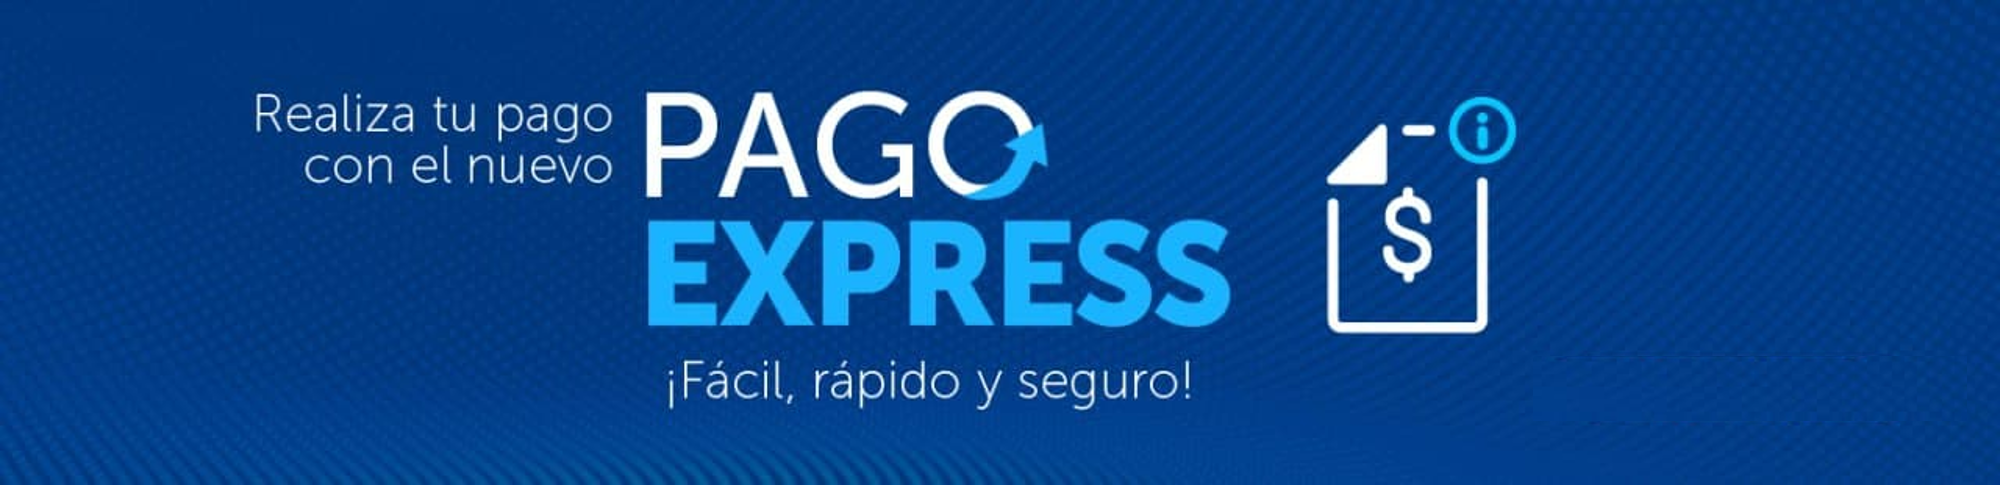 pago_express_banner.png